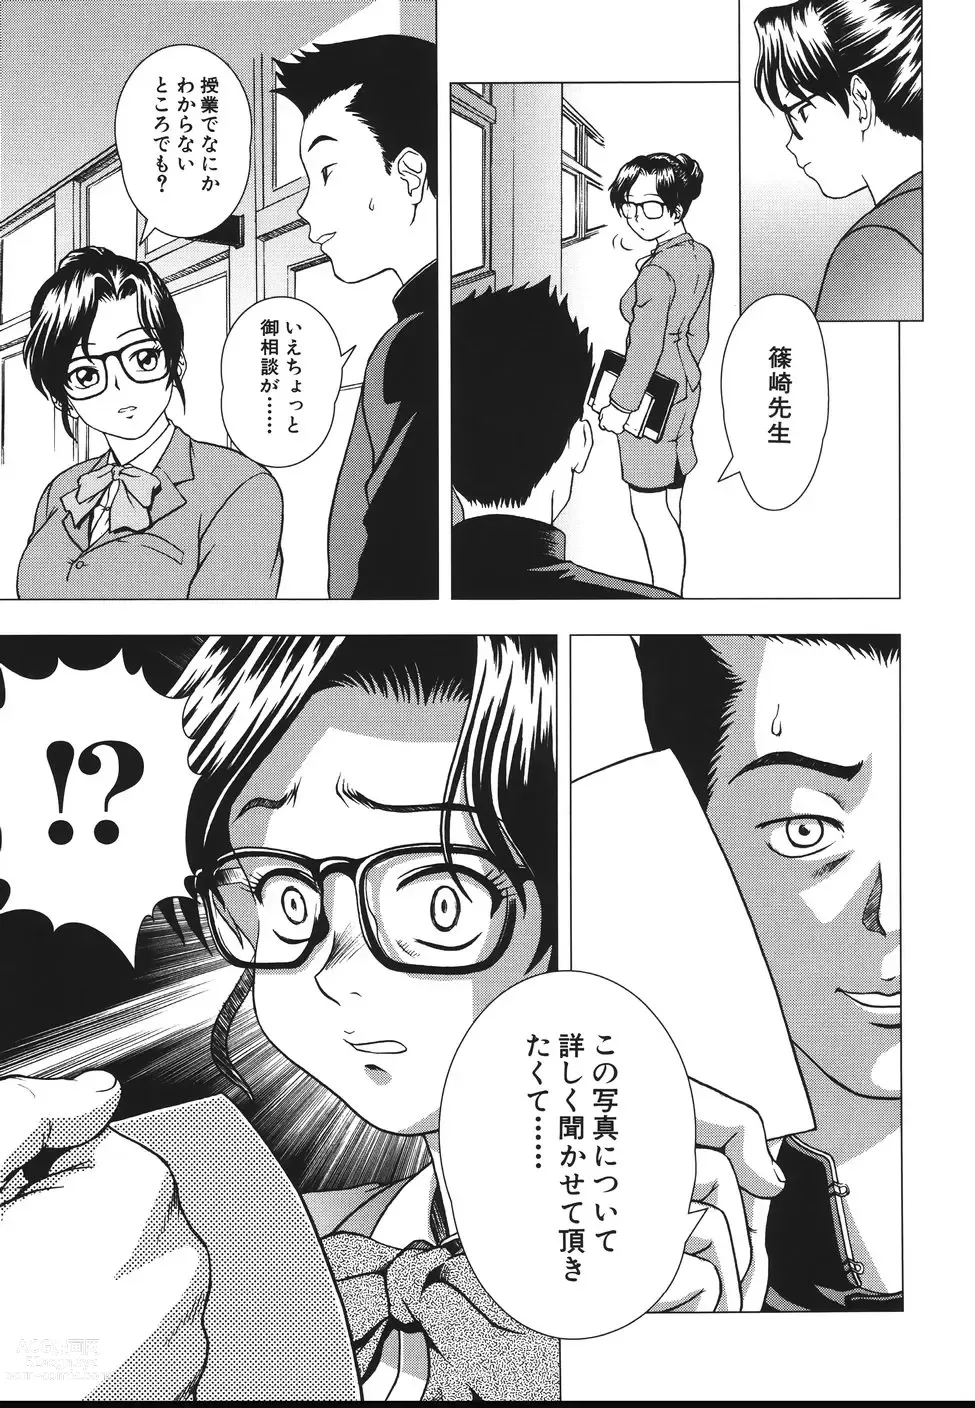 Page 189 of manga Shisupure